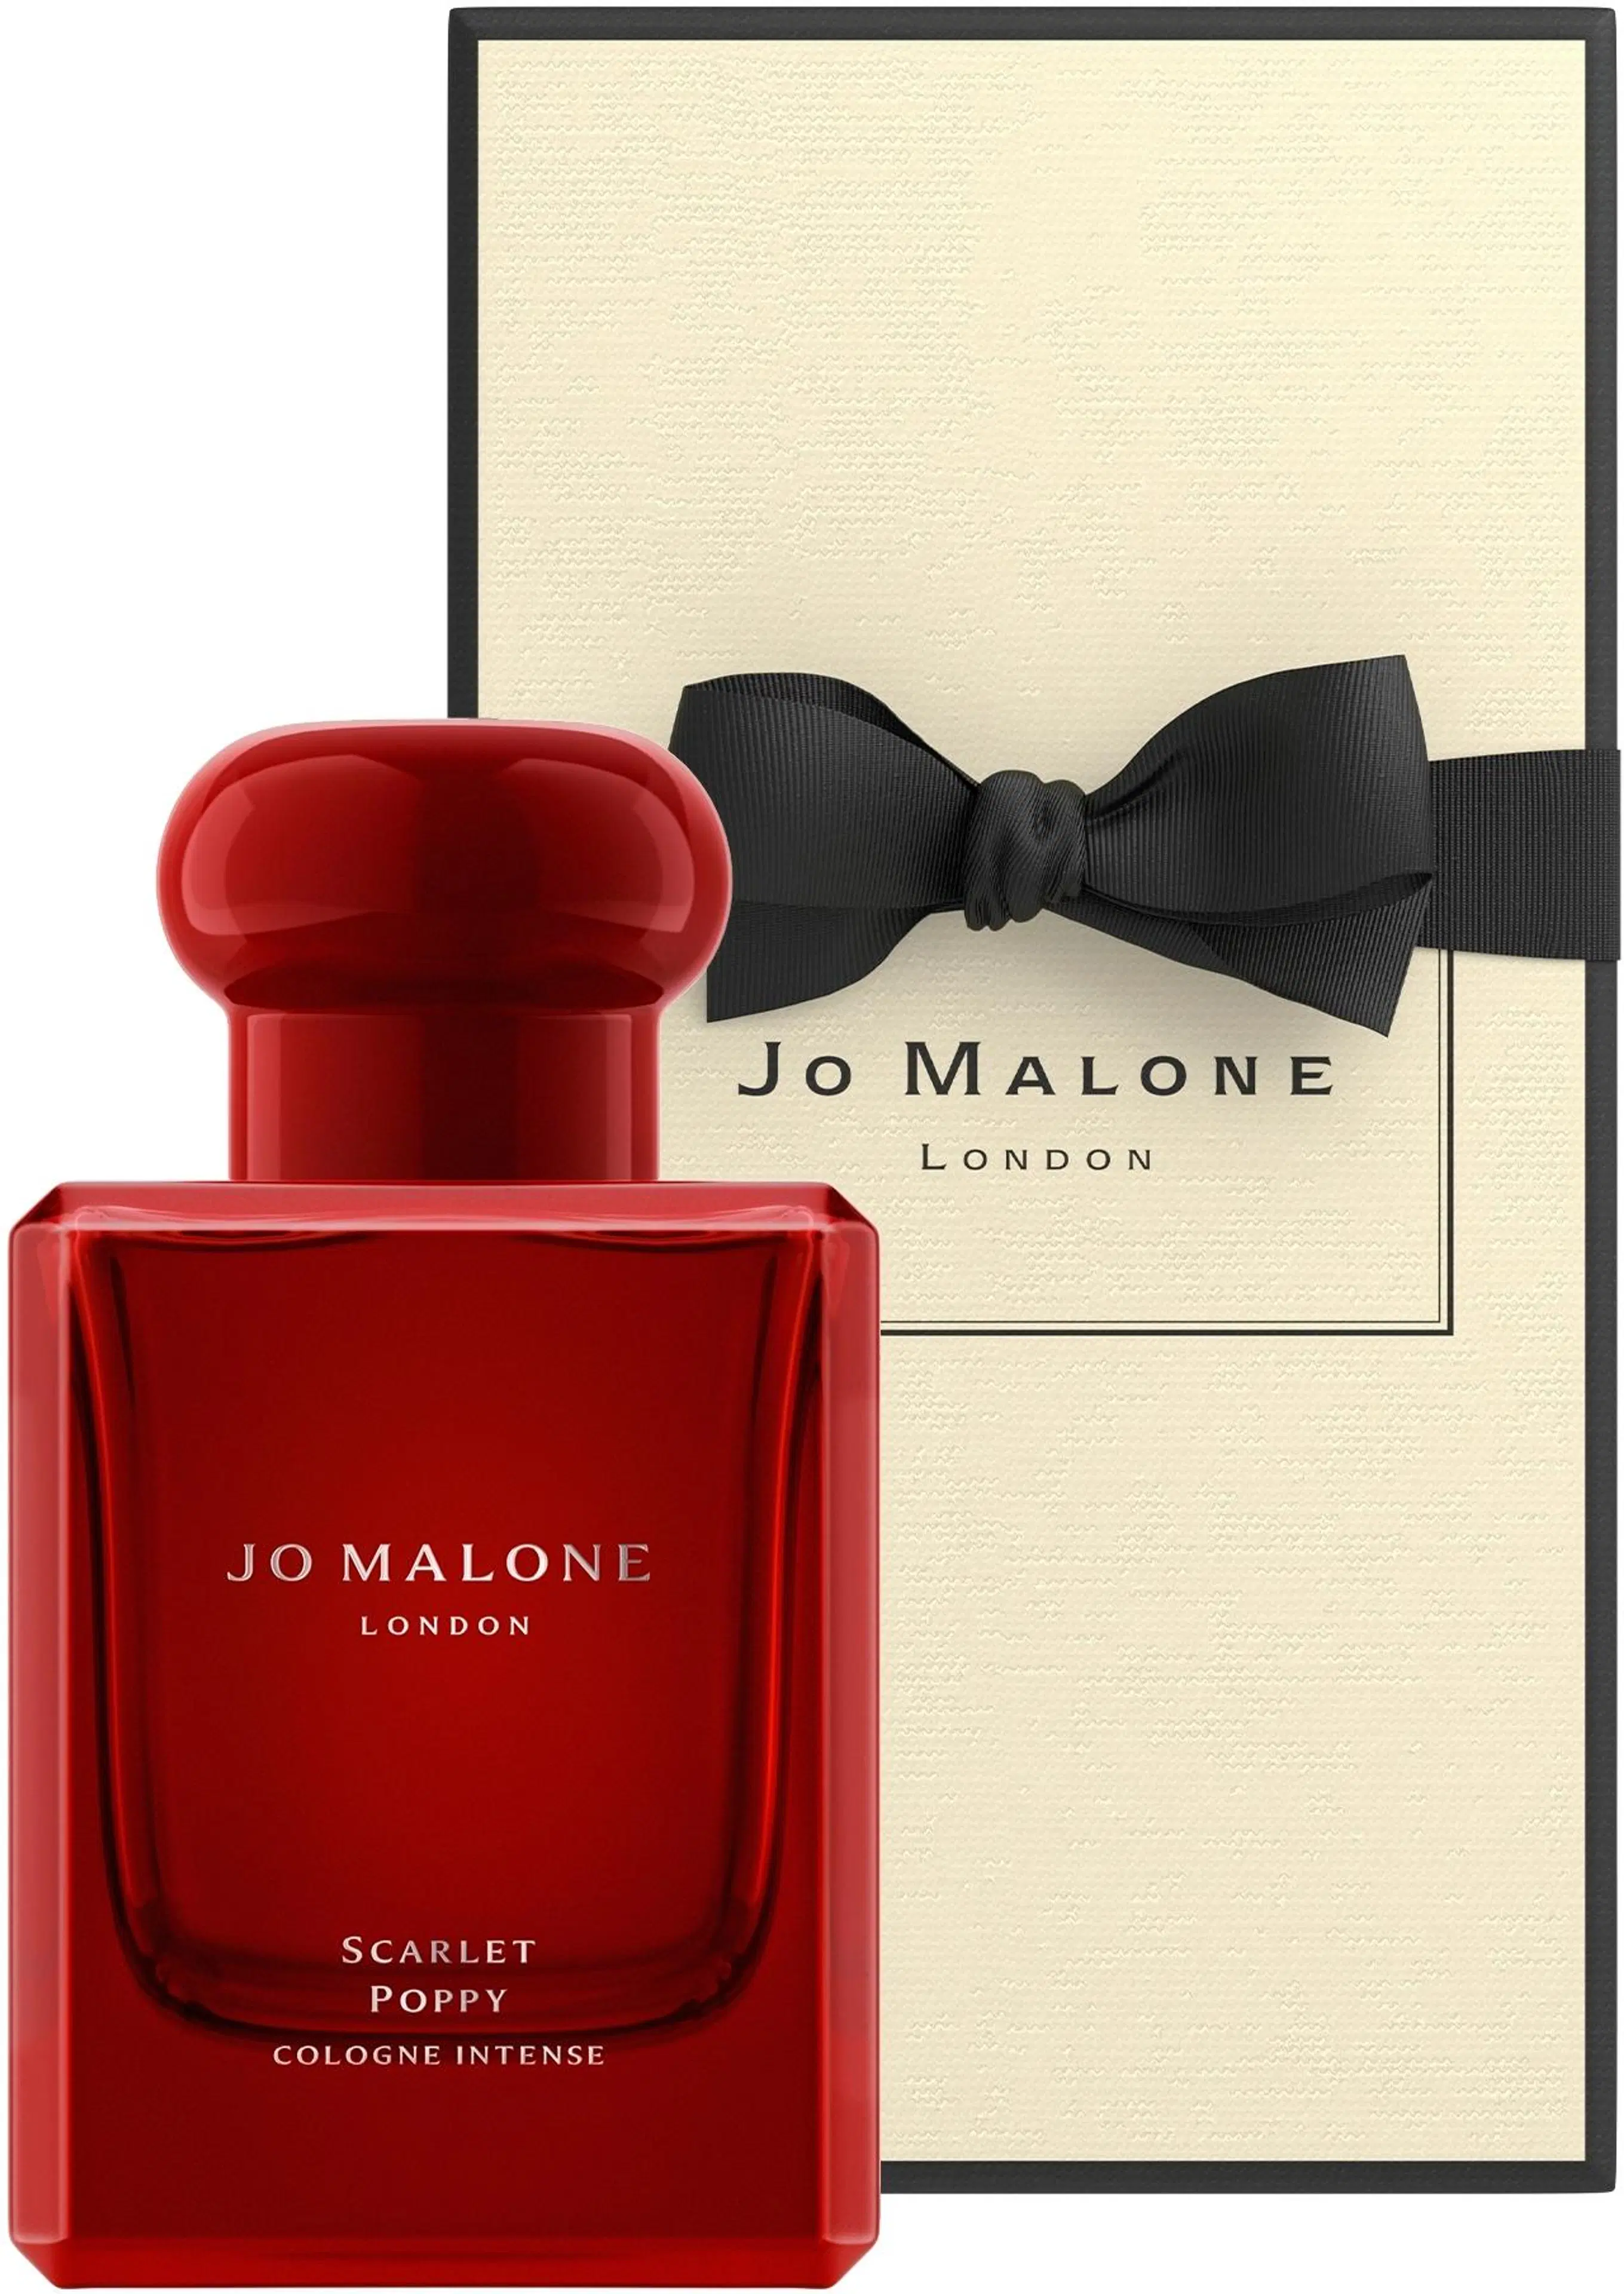 Jo Malone London Scarlet Poppy Cologne Intense tuoksu 50ml